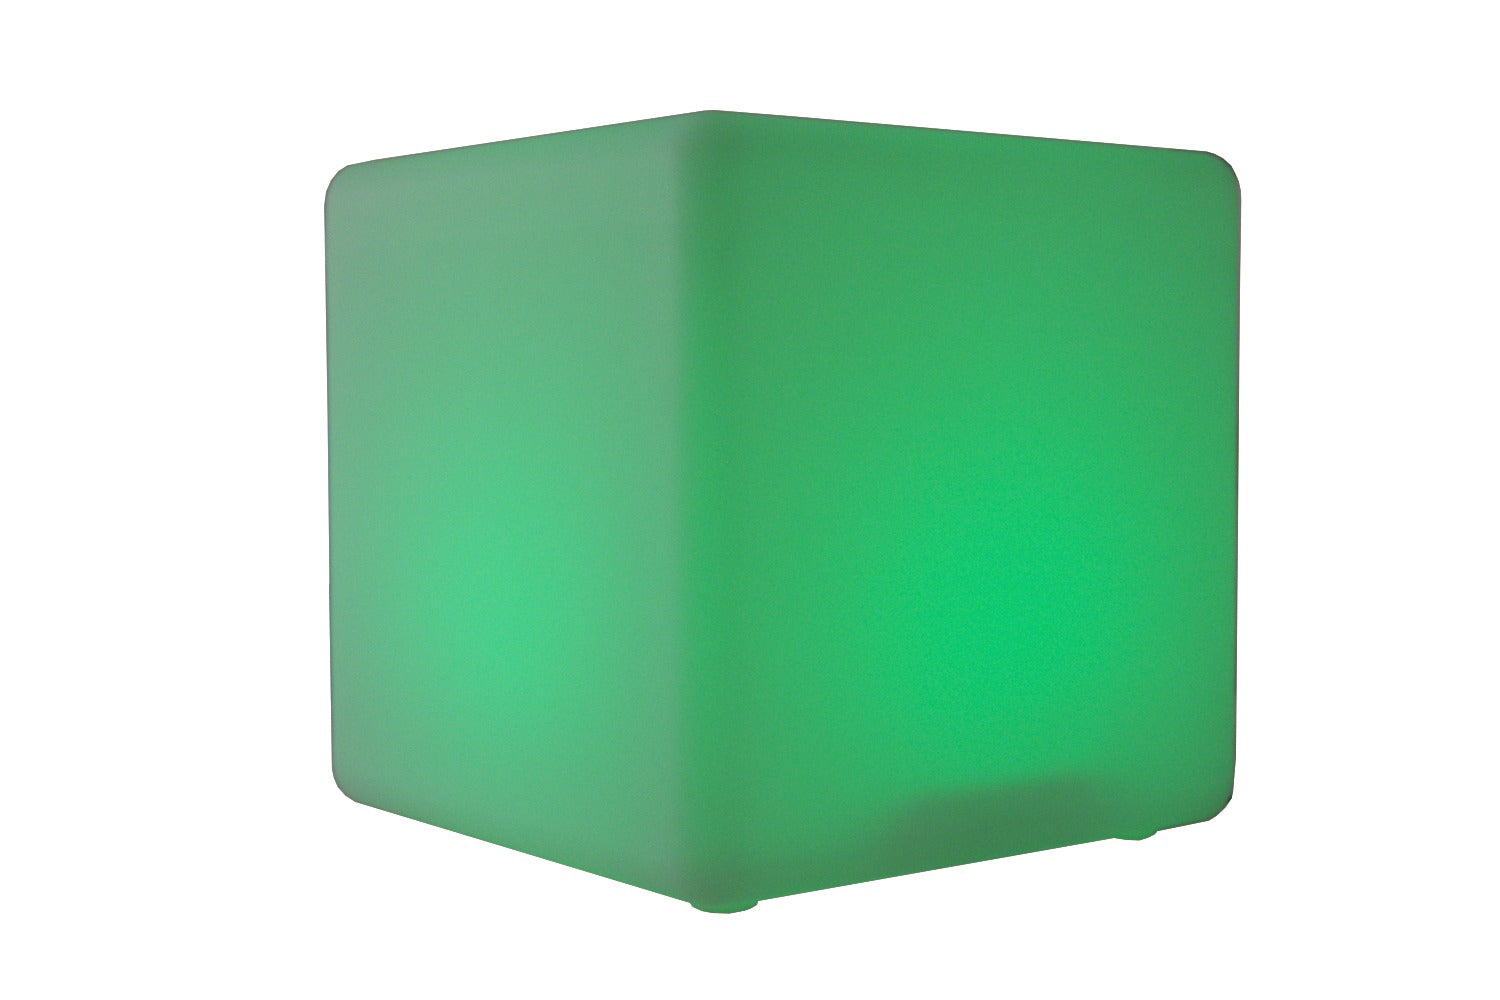 CUBECHAIR60 - LED cube chair seat 60x60x60cm